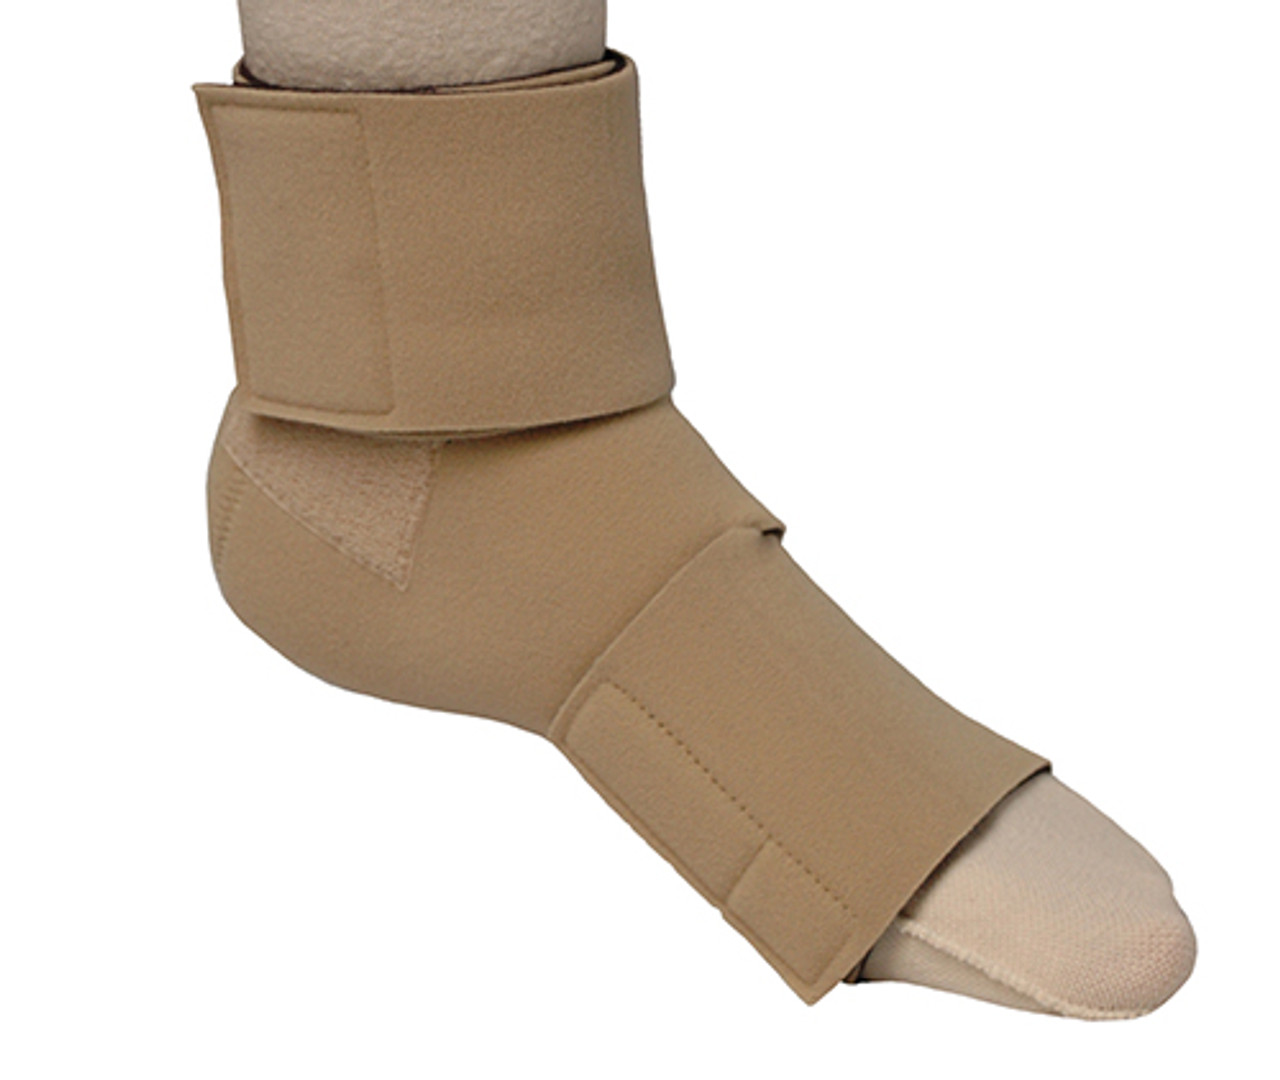 circaid Juxtafit Premium Ready-to-Wear Lower Leg compression